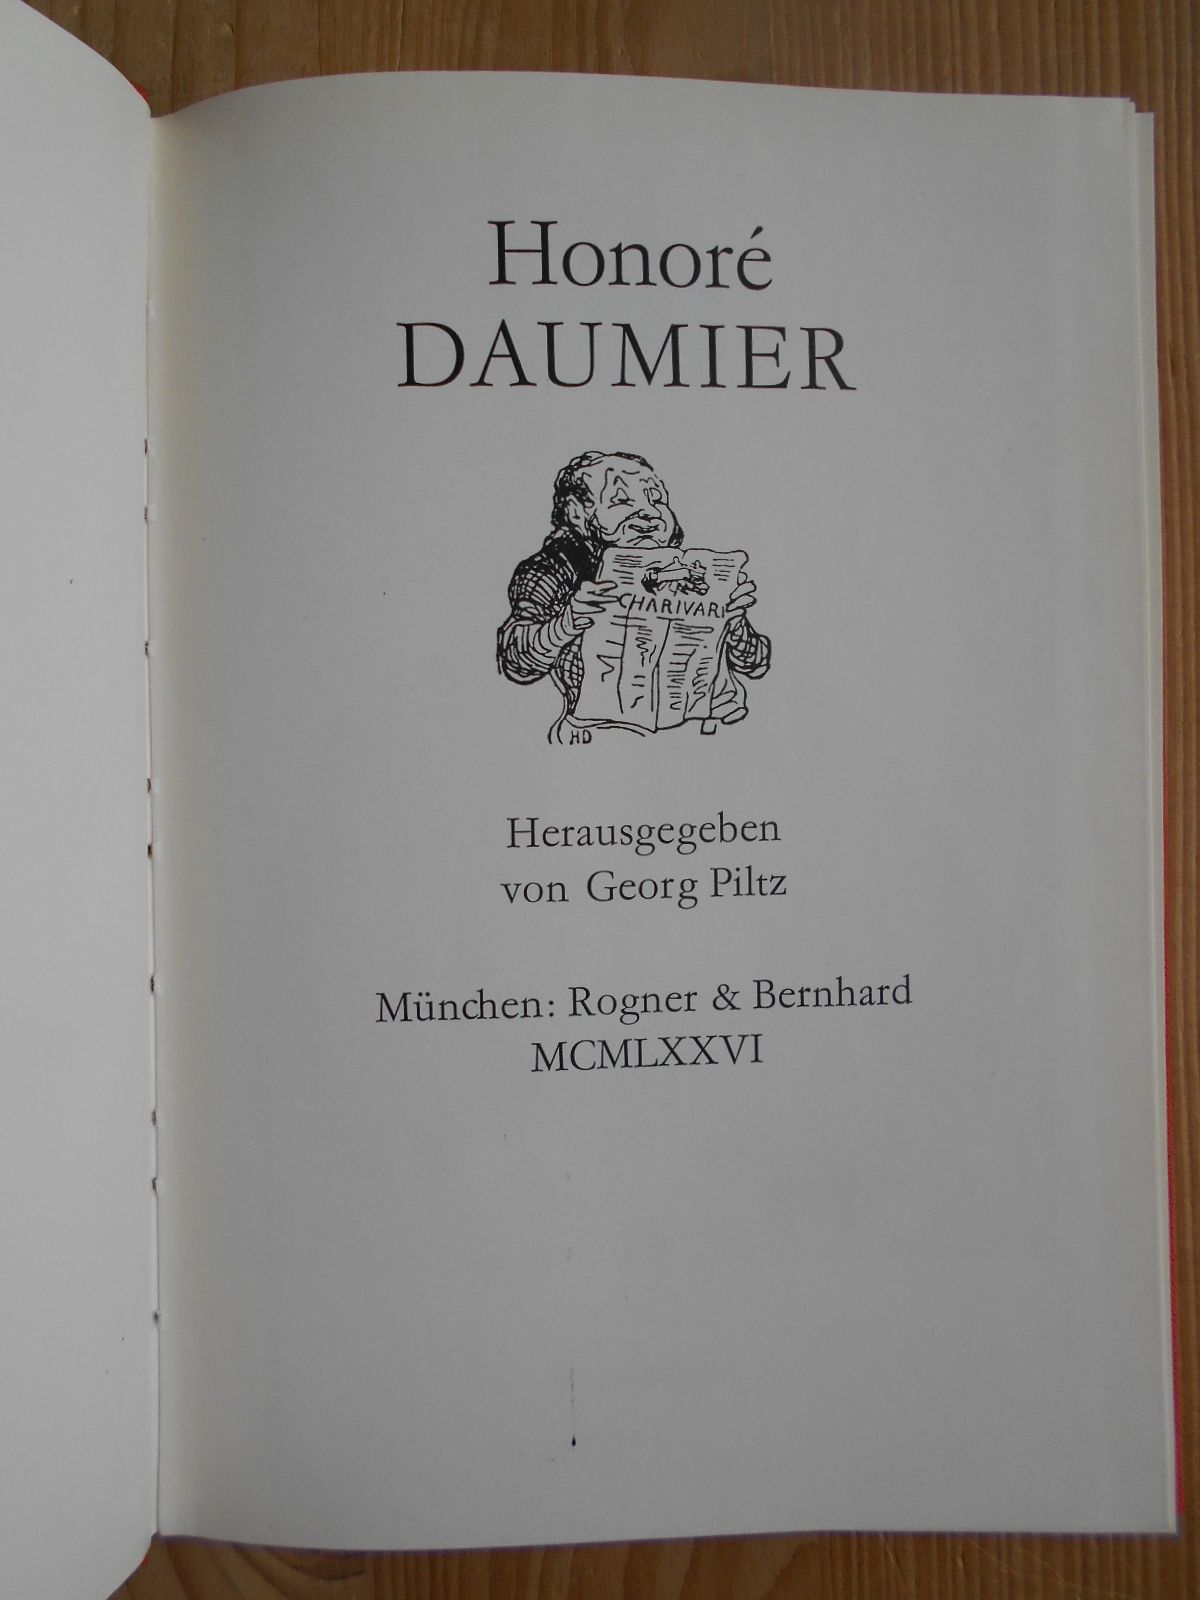 Honoré Daumier Klassiker der Karikatur 12 - Bildband, Graphik ; Karikatur, Bildende Kunst, Kunstgewerbe, Realismus - Daumier, Honoré und George (Hrsg.) Piltz